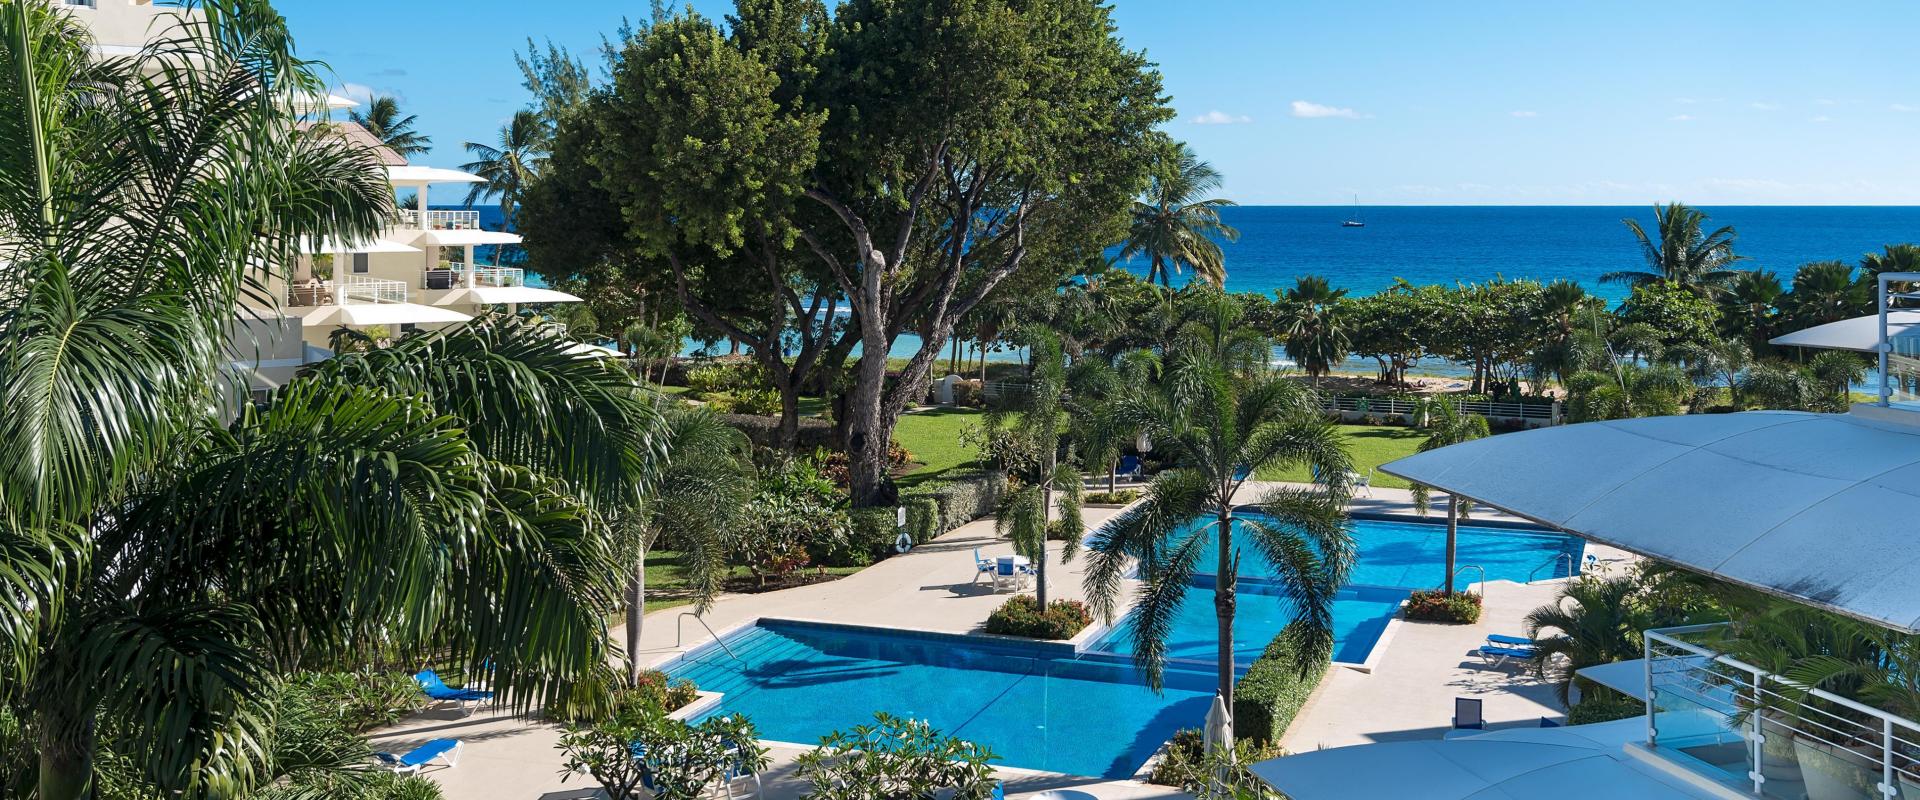 Palm Beach 211 Barbados Beachfront Vacation Condo Rental 3 Communal Swimming Pools